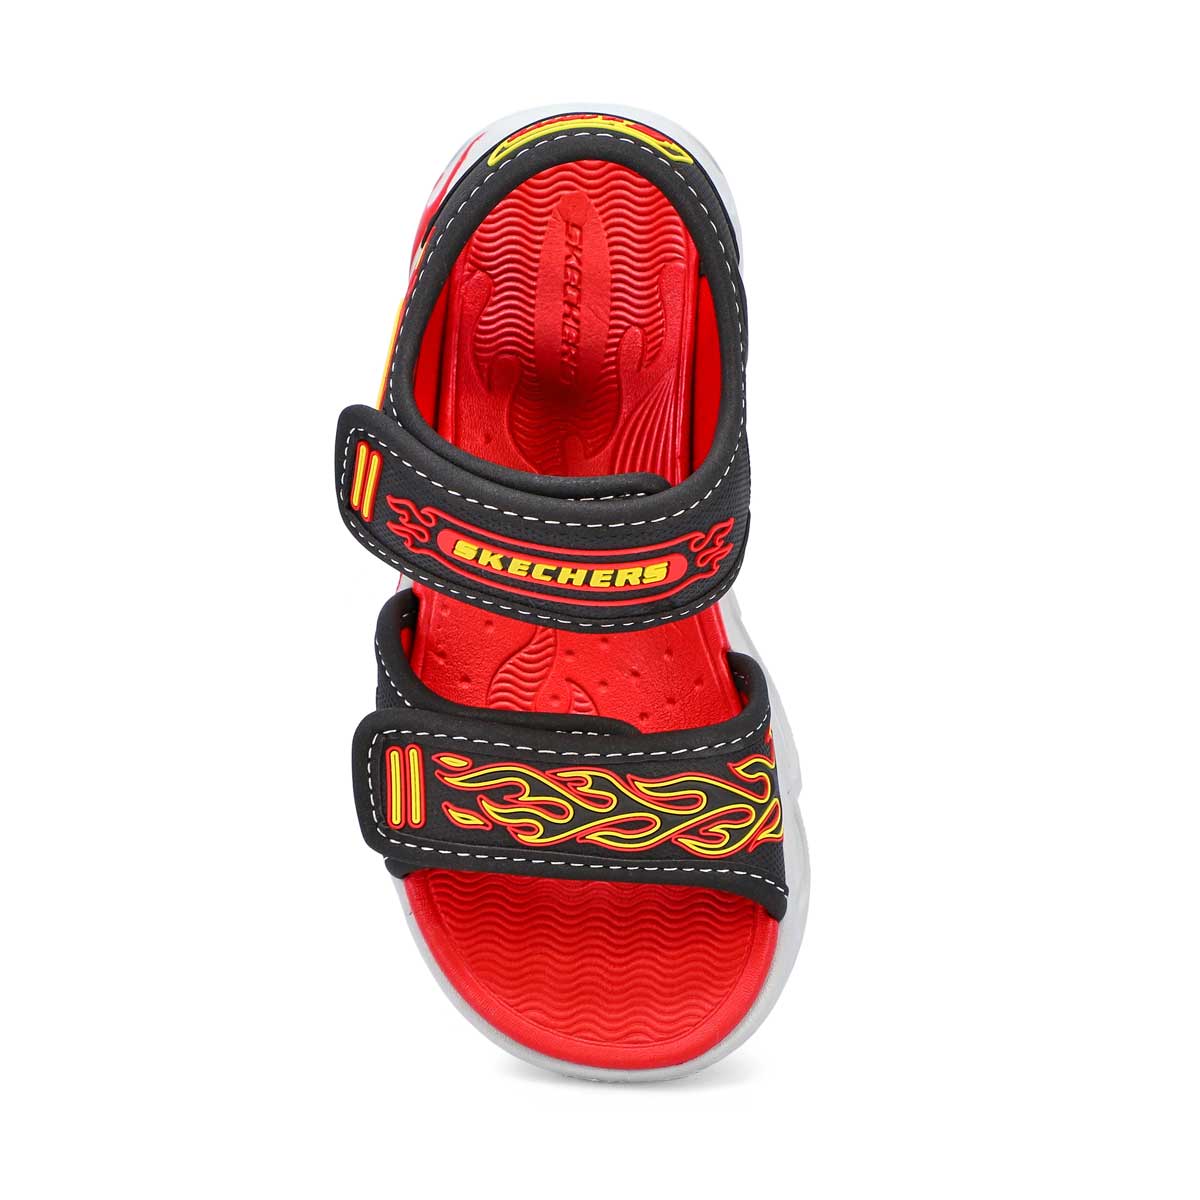 Boys' Thermo Splash Sandal - Black/Red